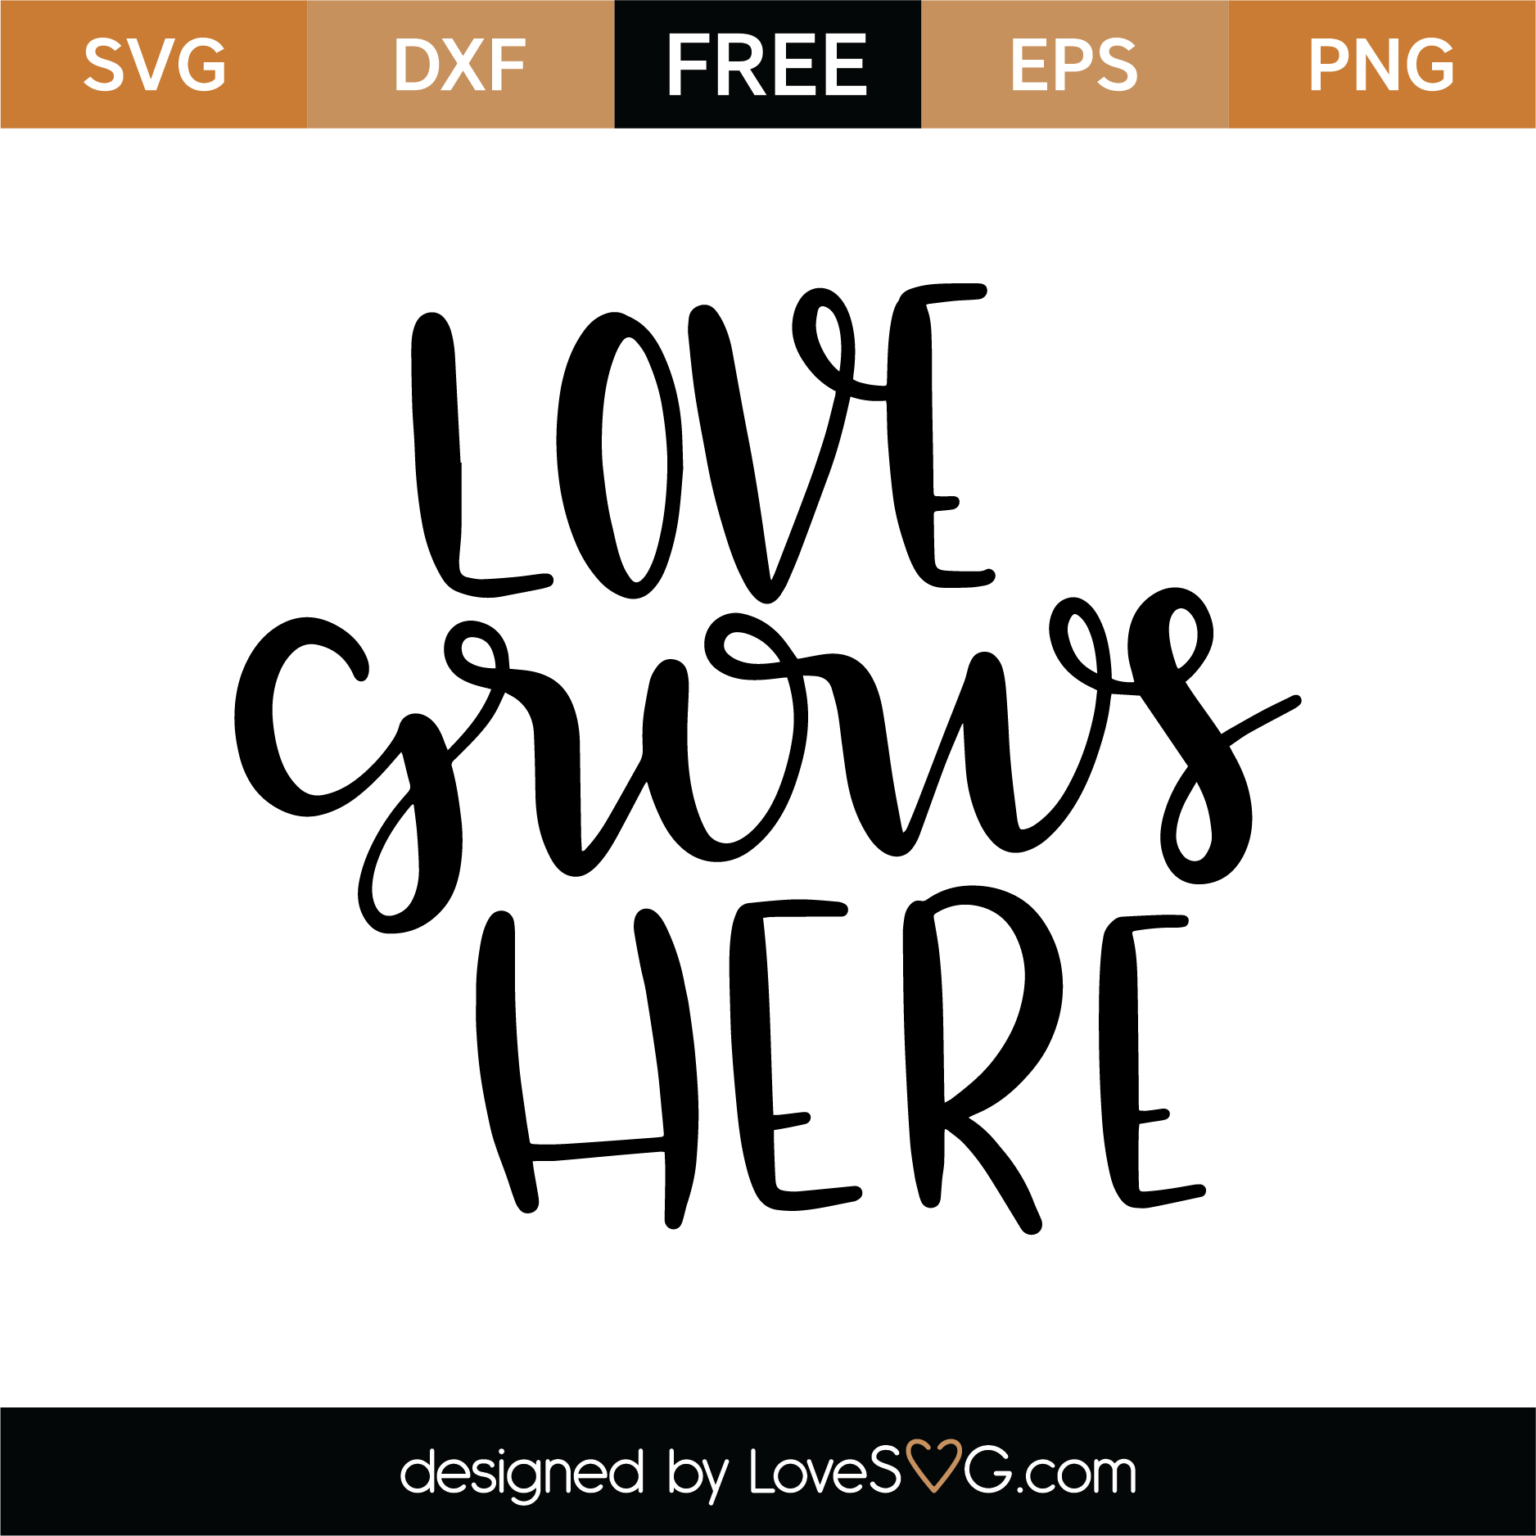 Download Love Grows Here SVG Cut File - Lovesvg.com